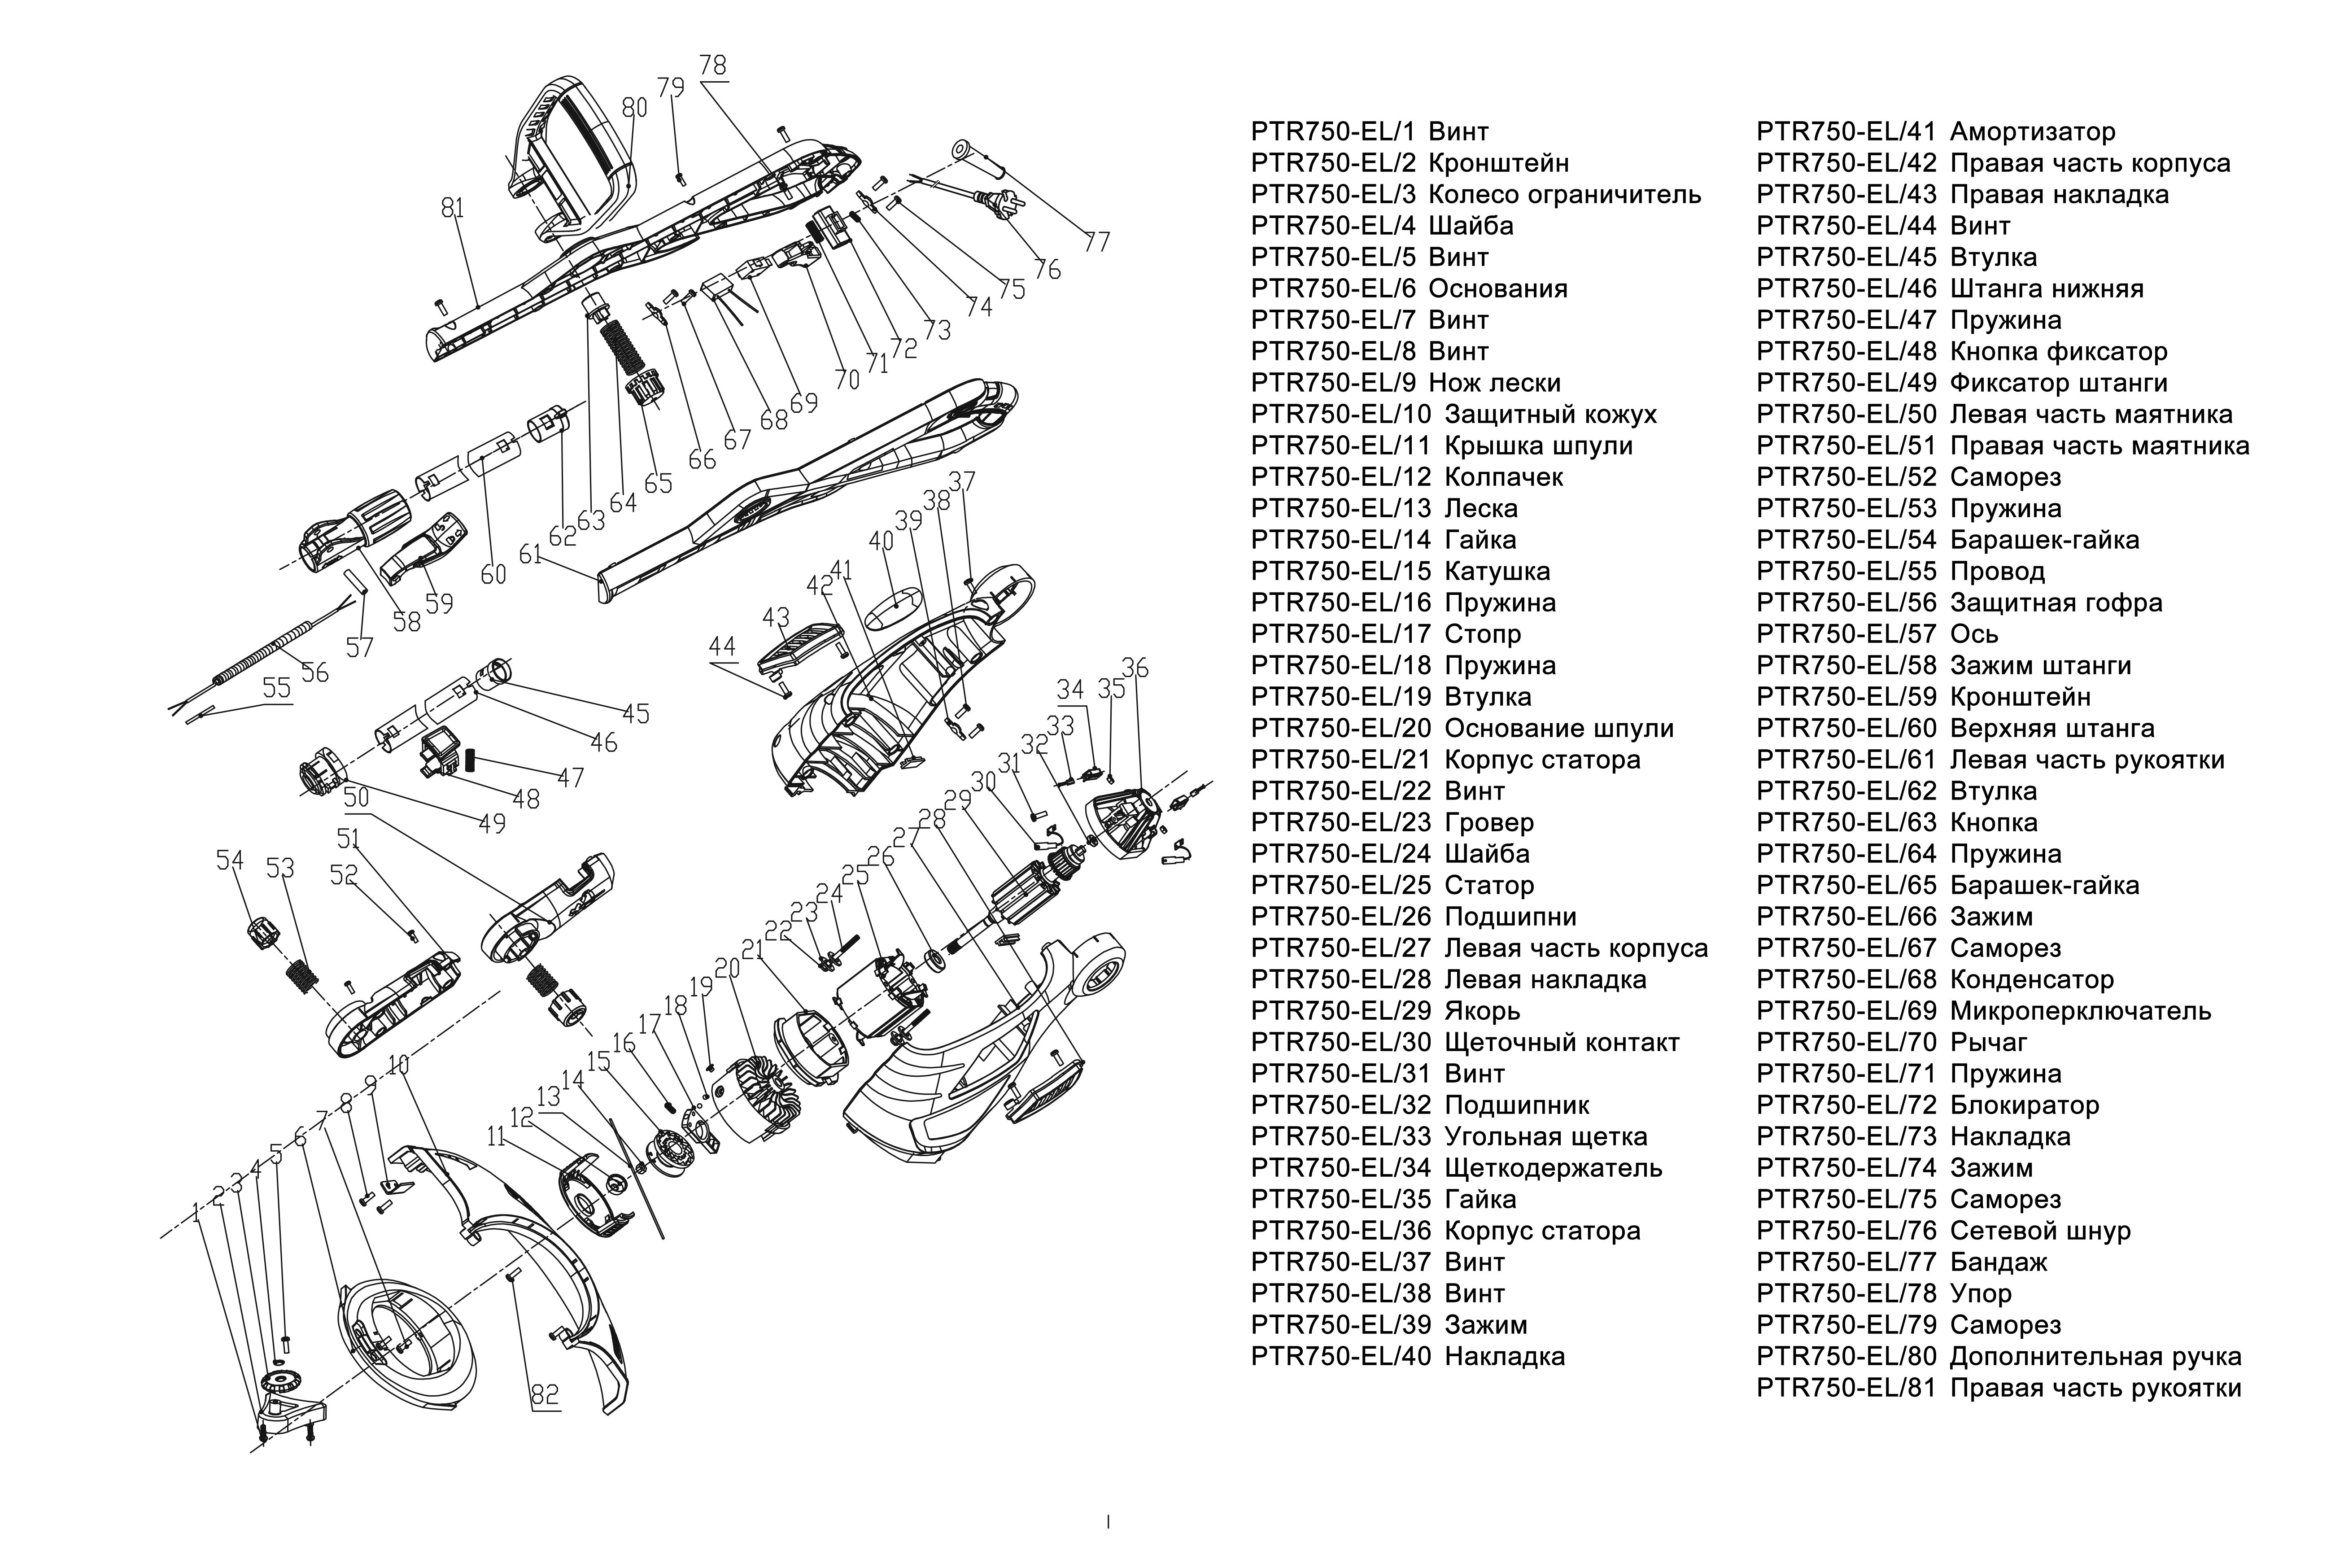 Запчасти, схема и деталировка Электротриммер PTR  750-EL